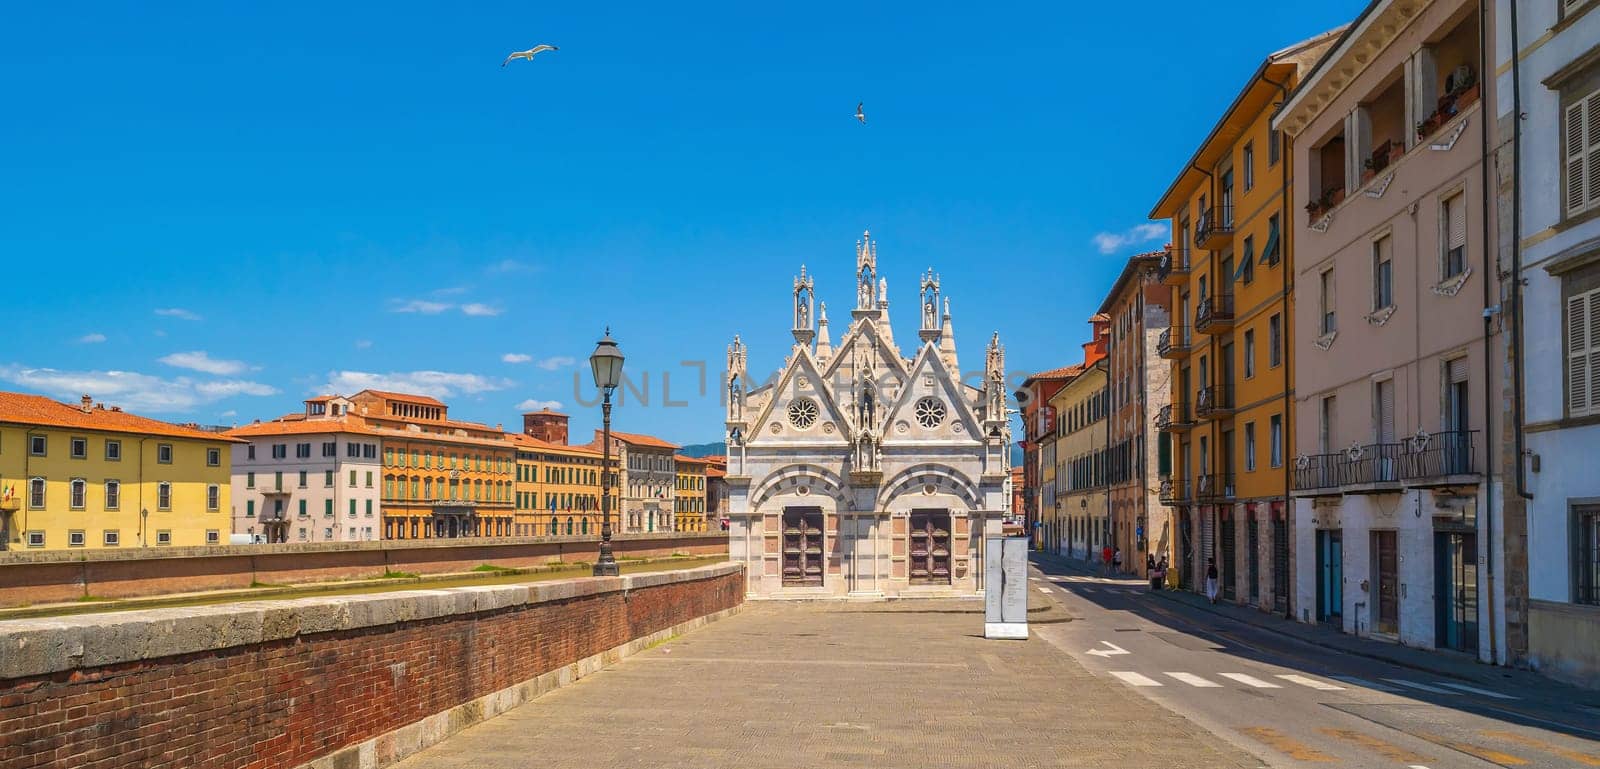 Santa Maria della Spina, beautiful Church near river Arno in Pisa, Tuscany by f11photo